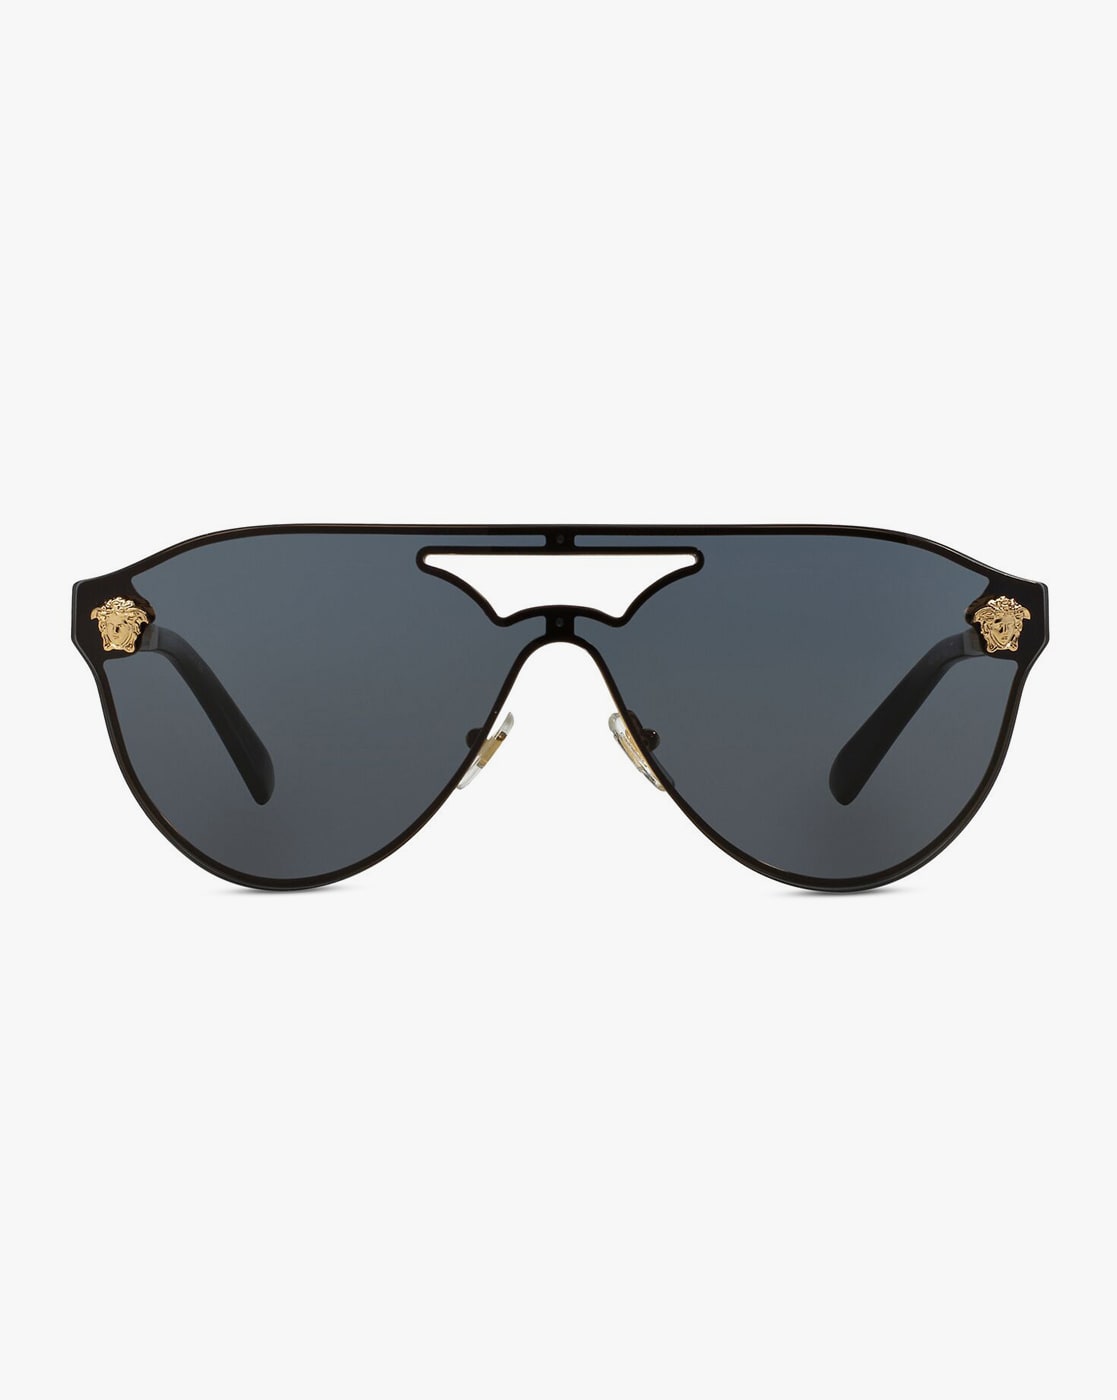 Replica Versace Sunglasses DVVE13-1 - Designers Village